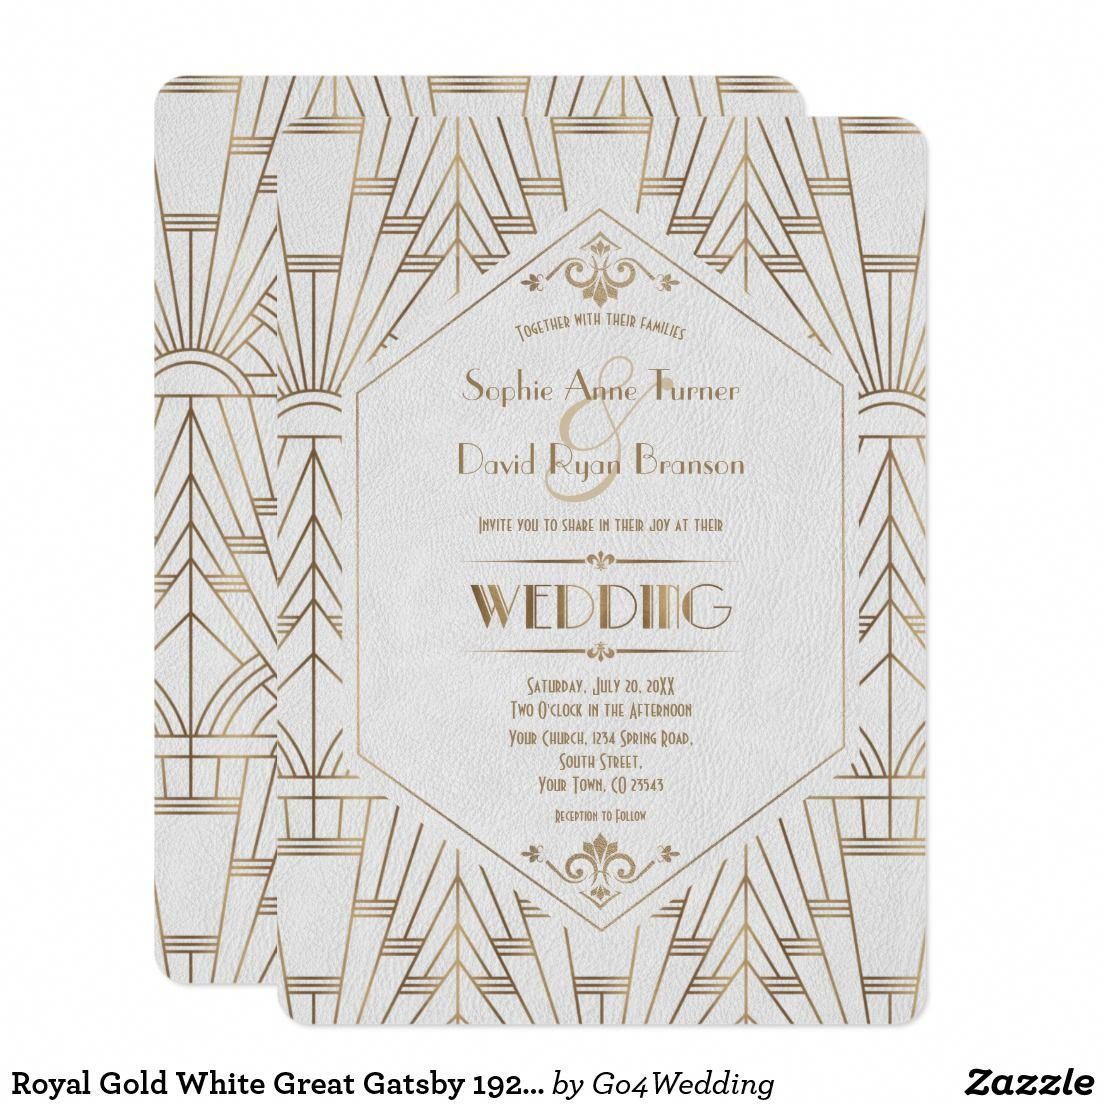 Royal Gold White Great Gatsby 1920s Wedding Invitation | Zazzle.com -   15 wedding Themes 1920s ideas